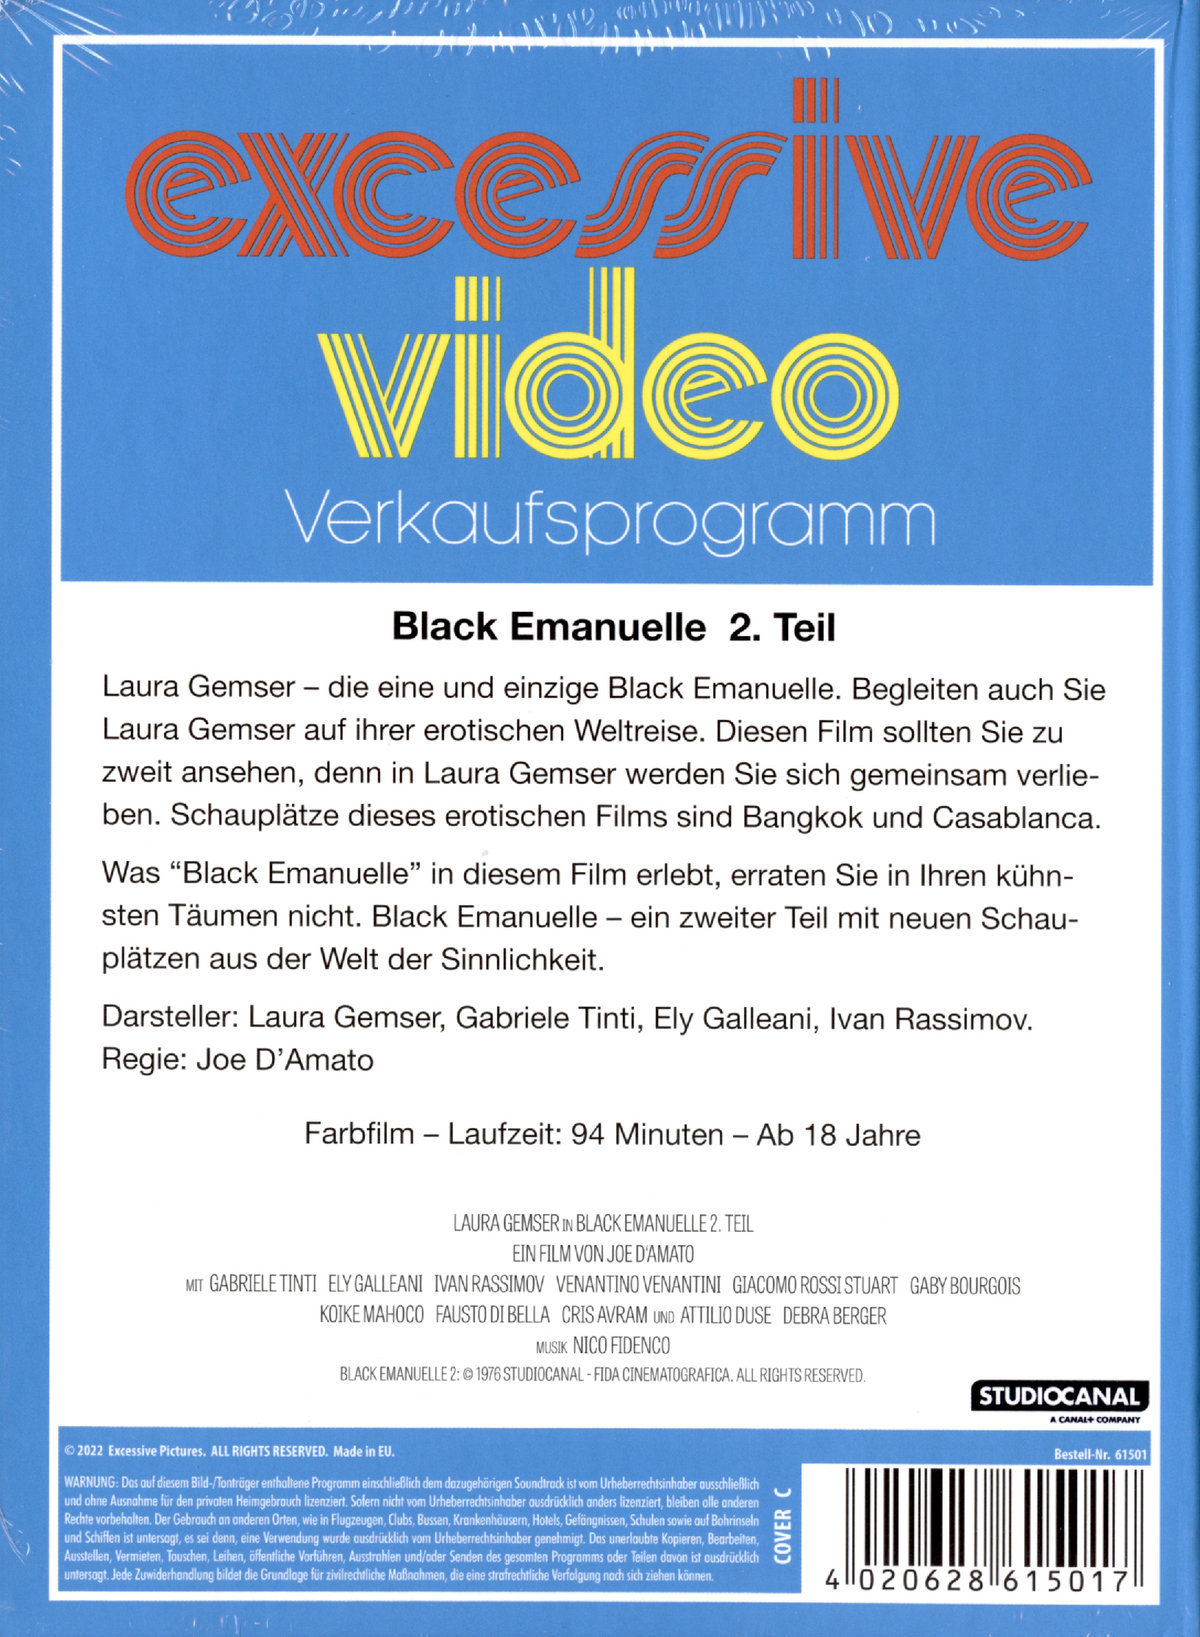 Black Emanuelle - Teil 2 - Uncut Mediabook Edition (DVD+blu-ray) (C)